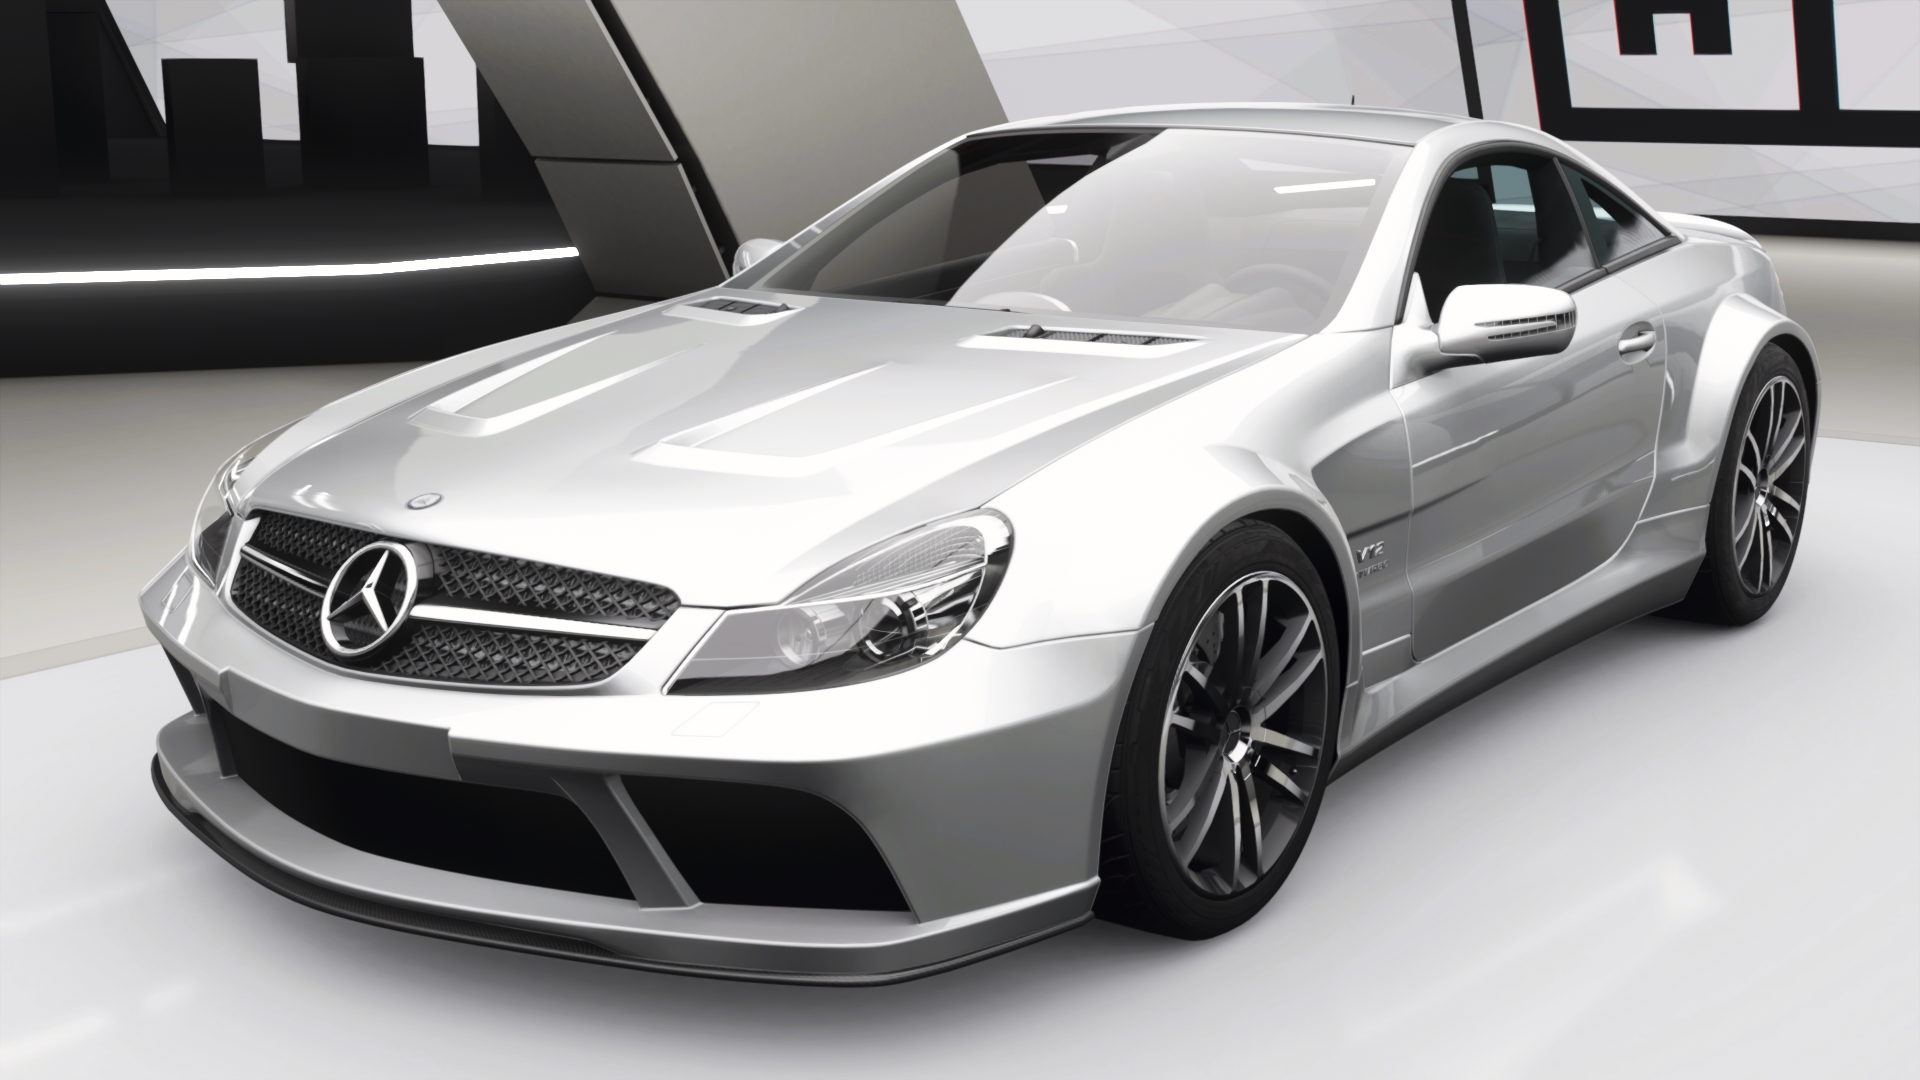 Mercedes-Benz SL 65 AMG Black Series | Forza Motorsport Wiki | FANDOM powered by Wikia